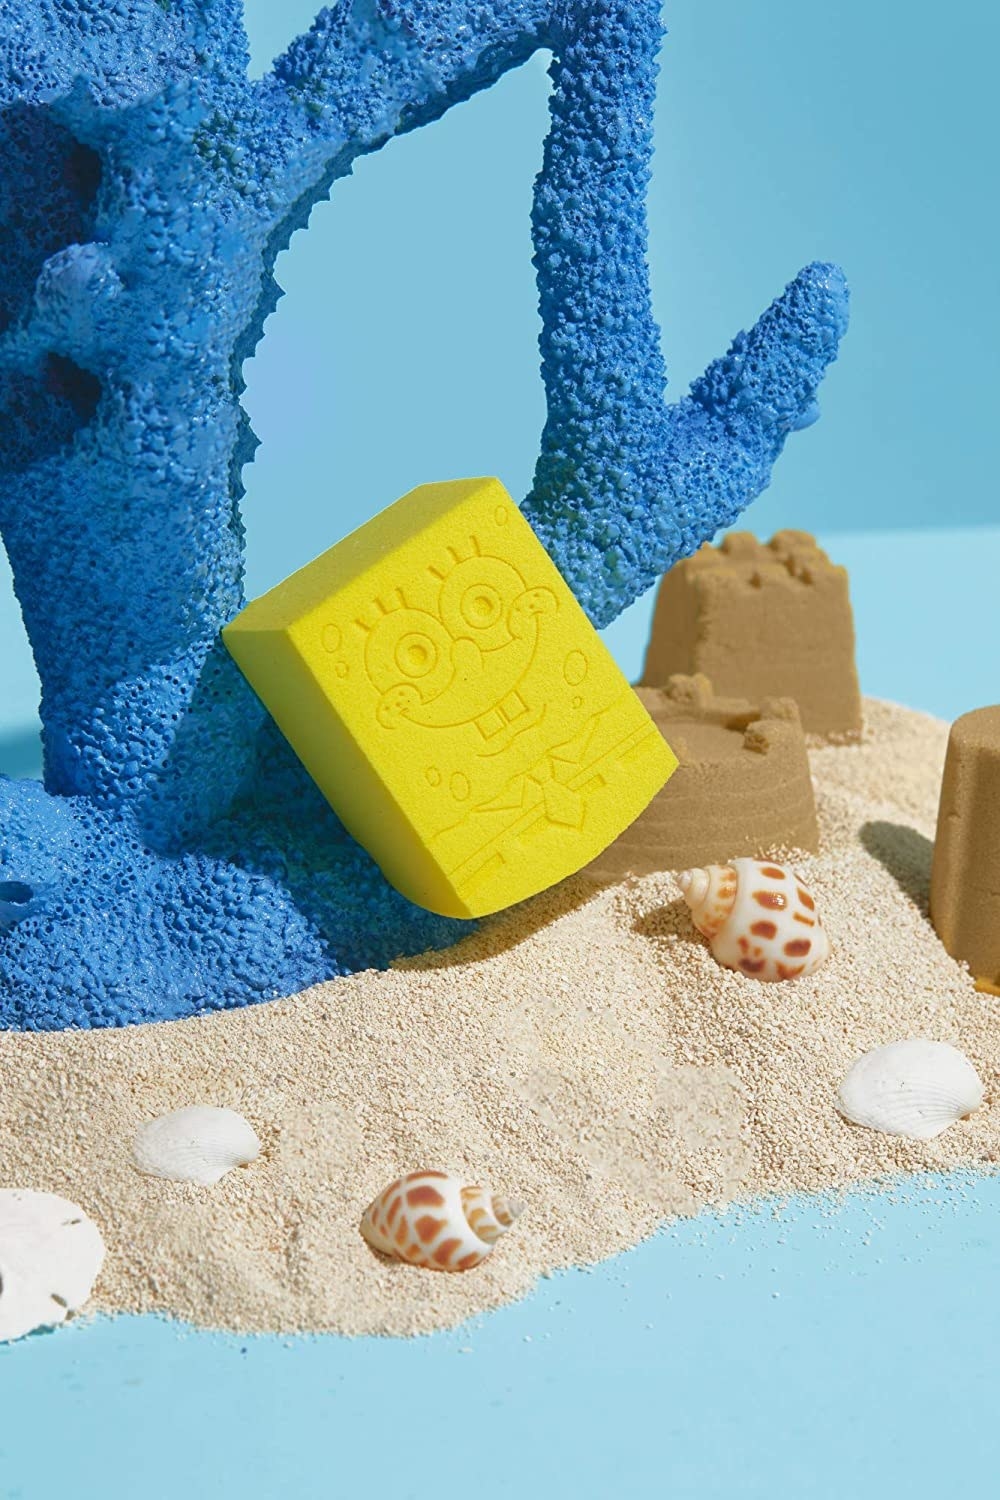 SpongeBob Squarepants makeup sponge placed on beach-themed background